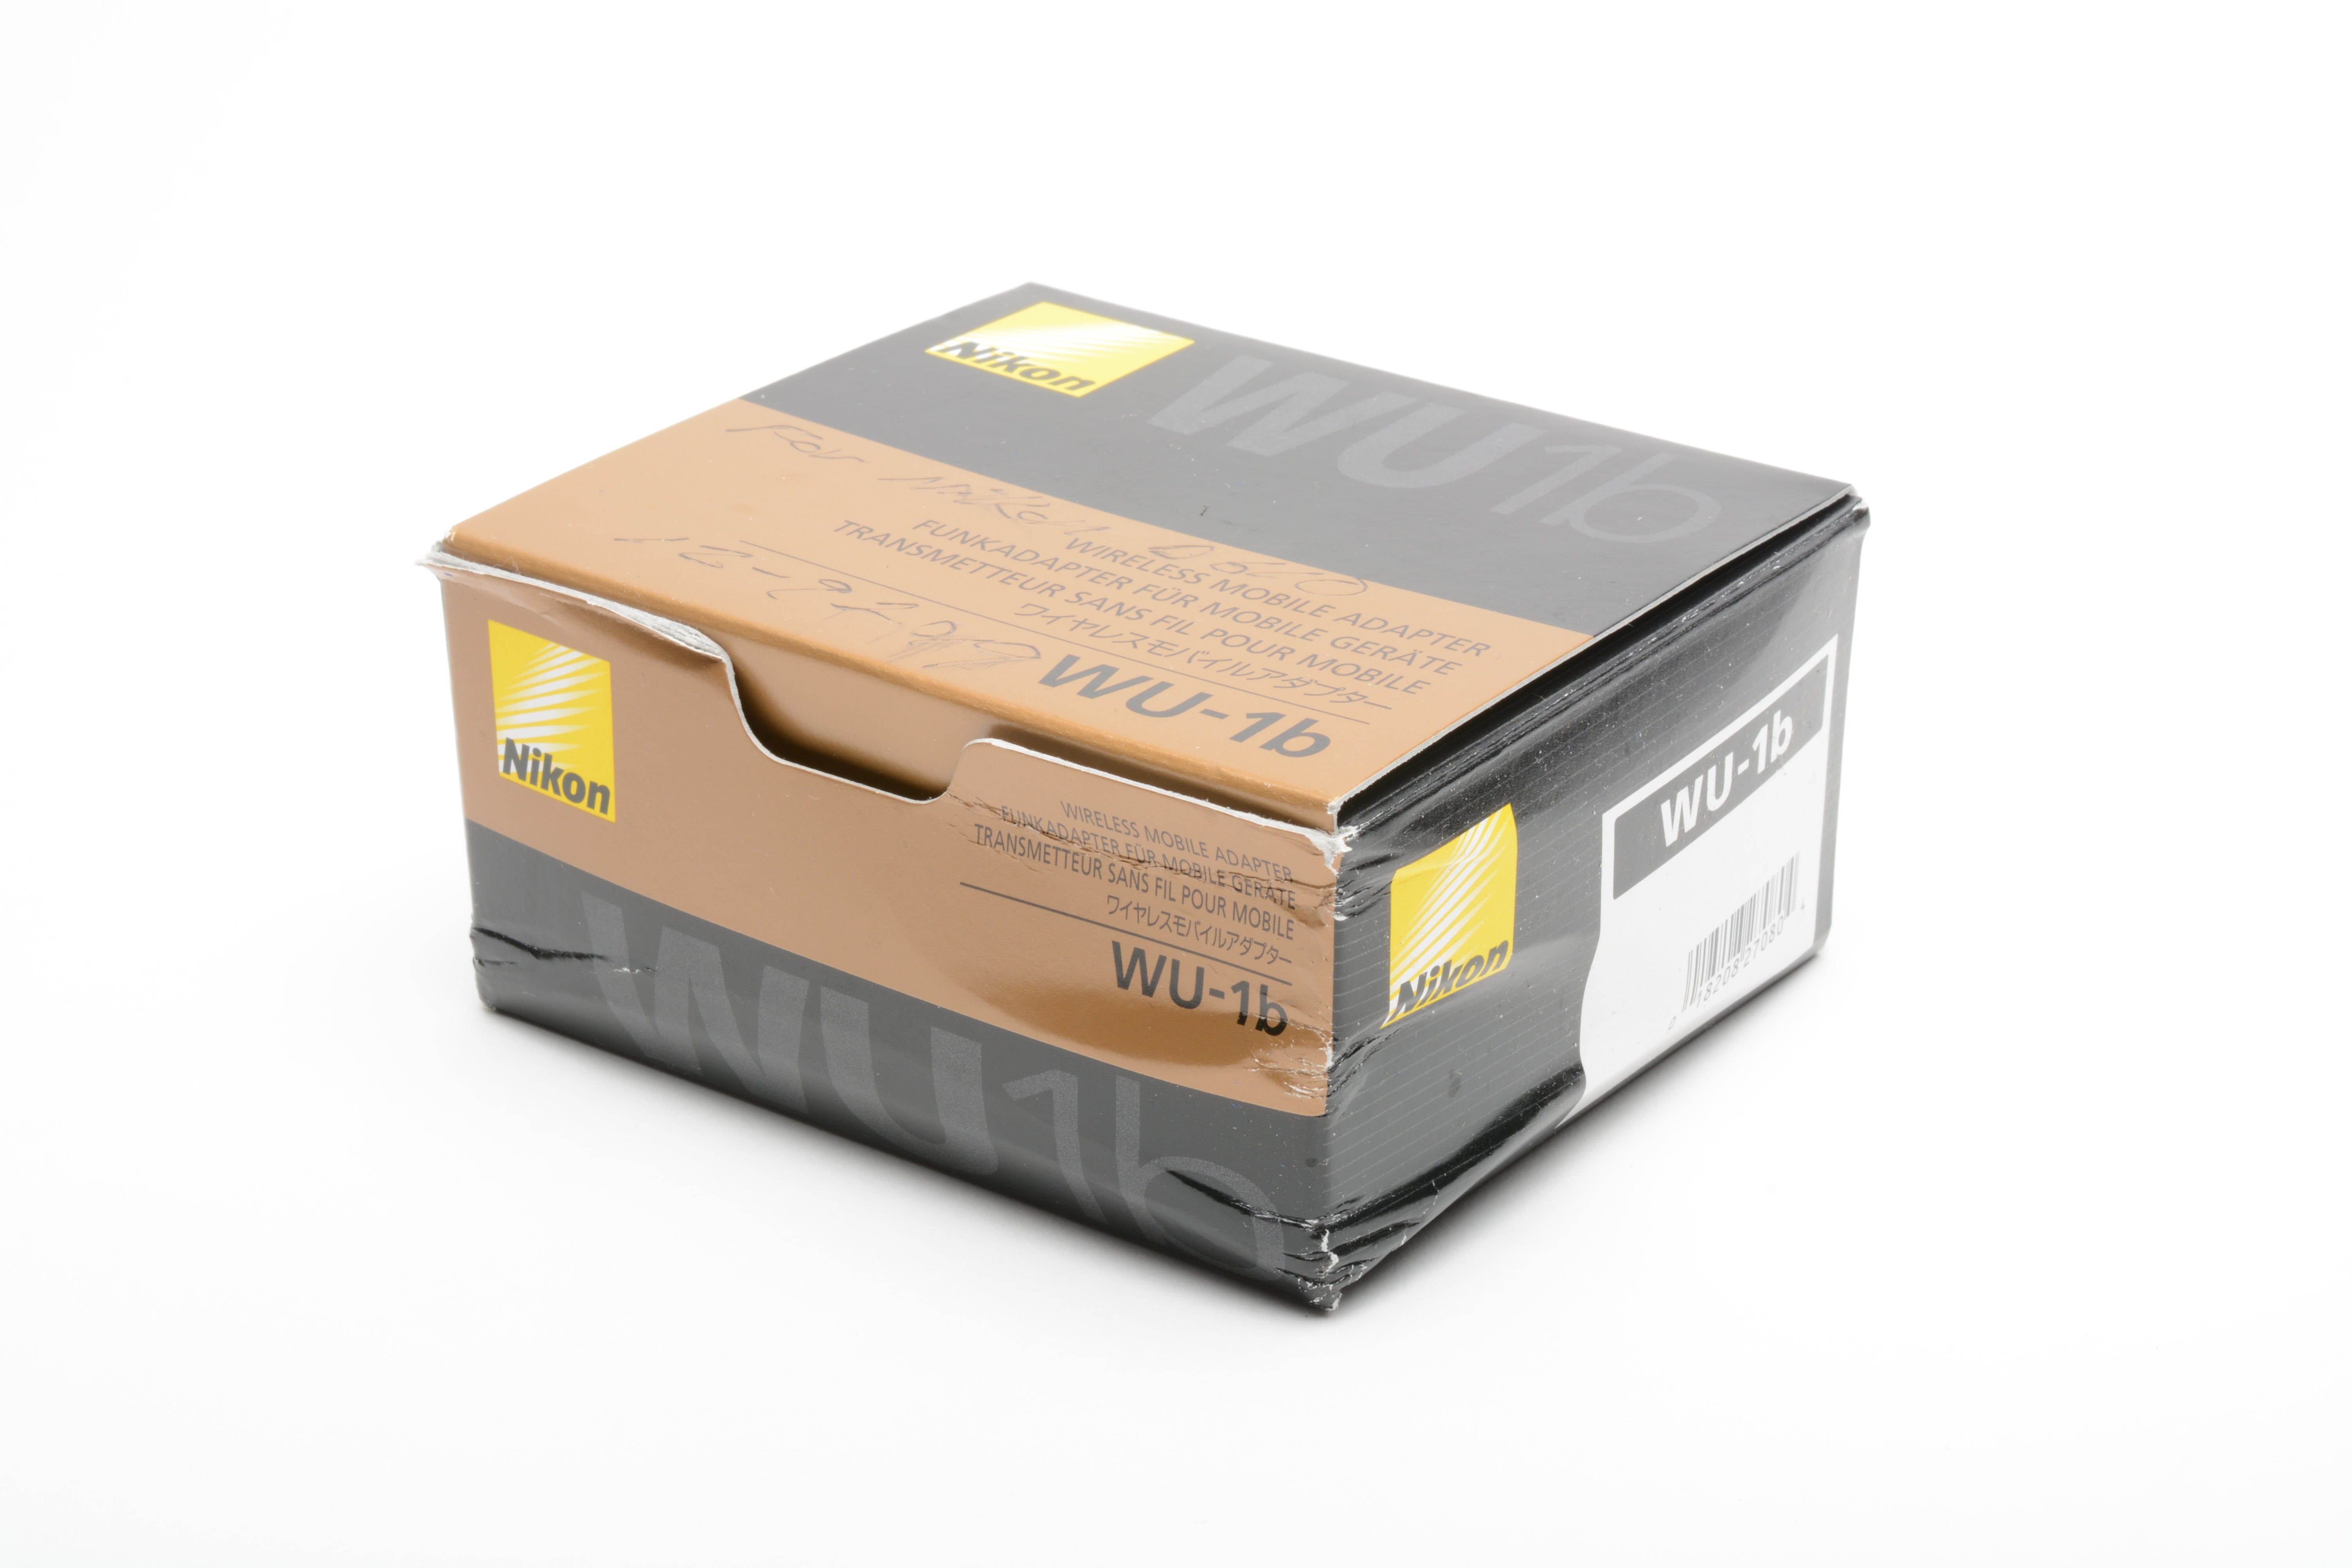 Nikon WU-1b wireless adapter w/case, instructions, very clean